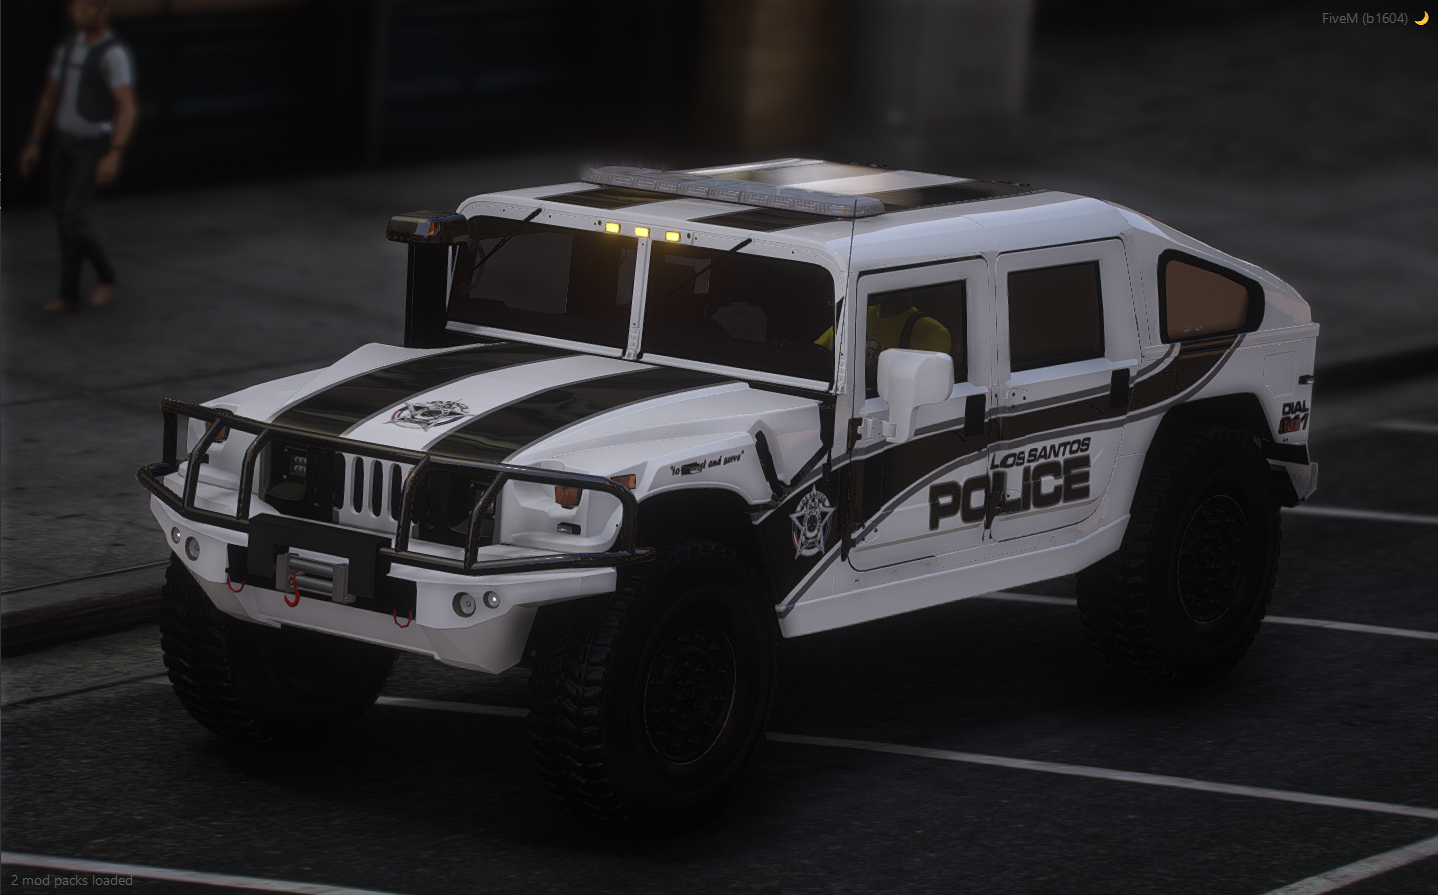 Generic Police SUV